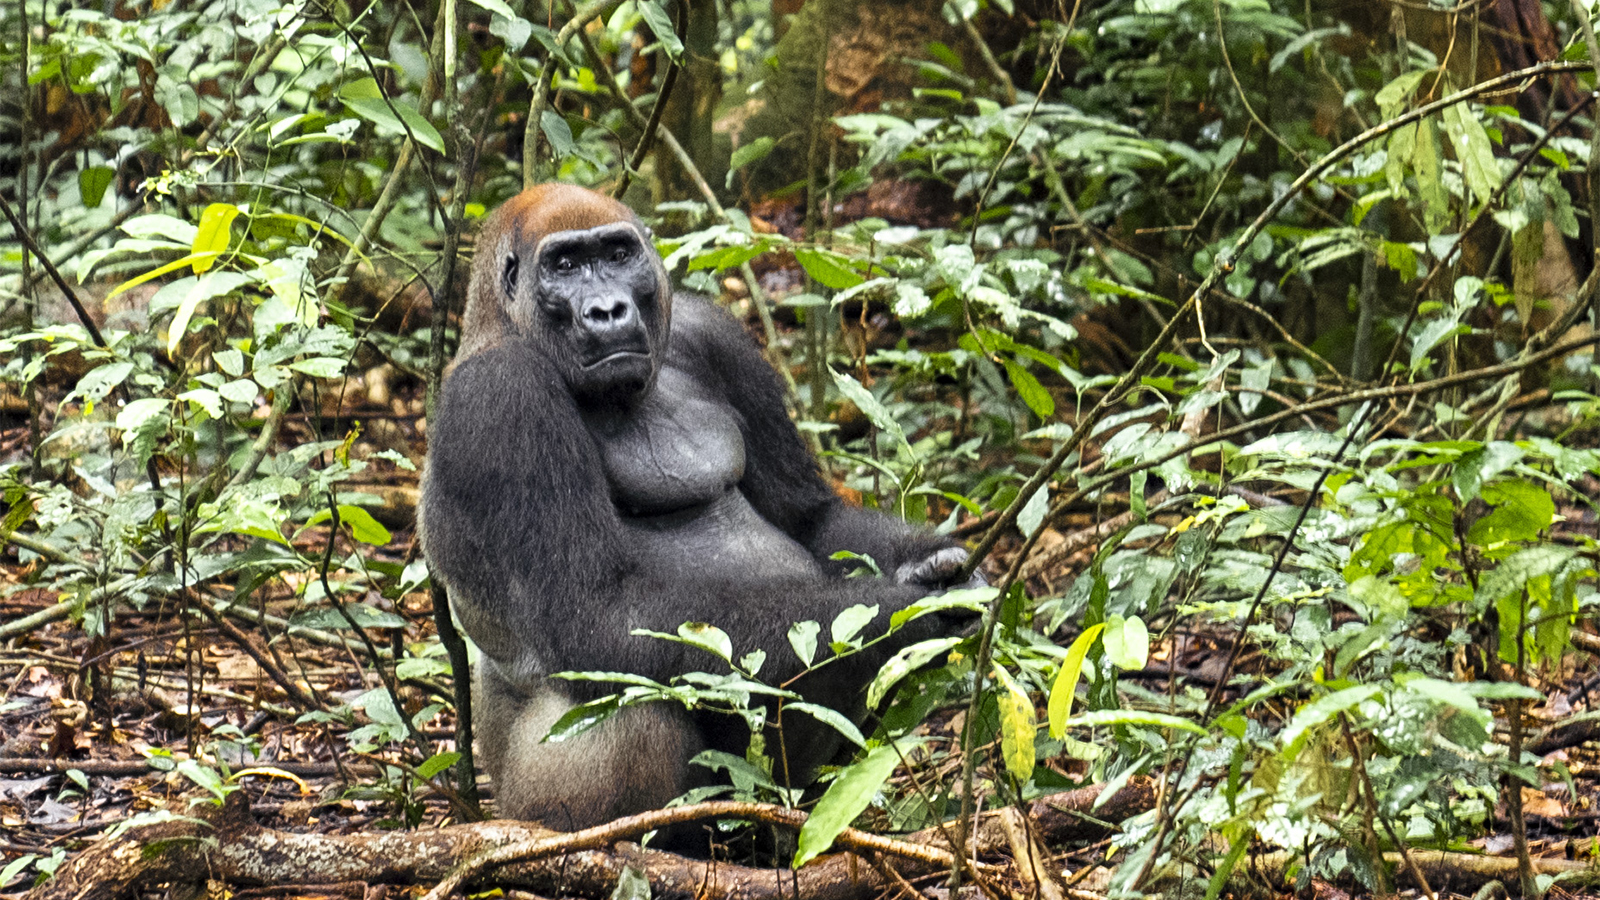 A gorilla in Loango national park